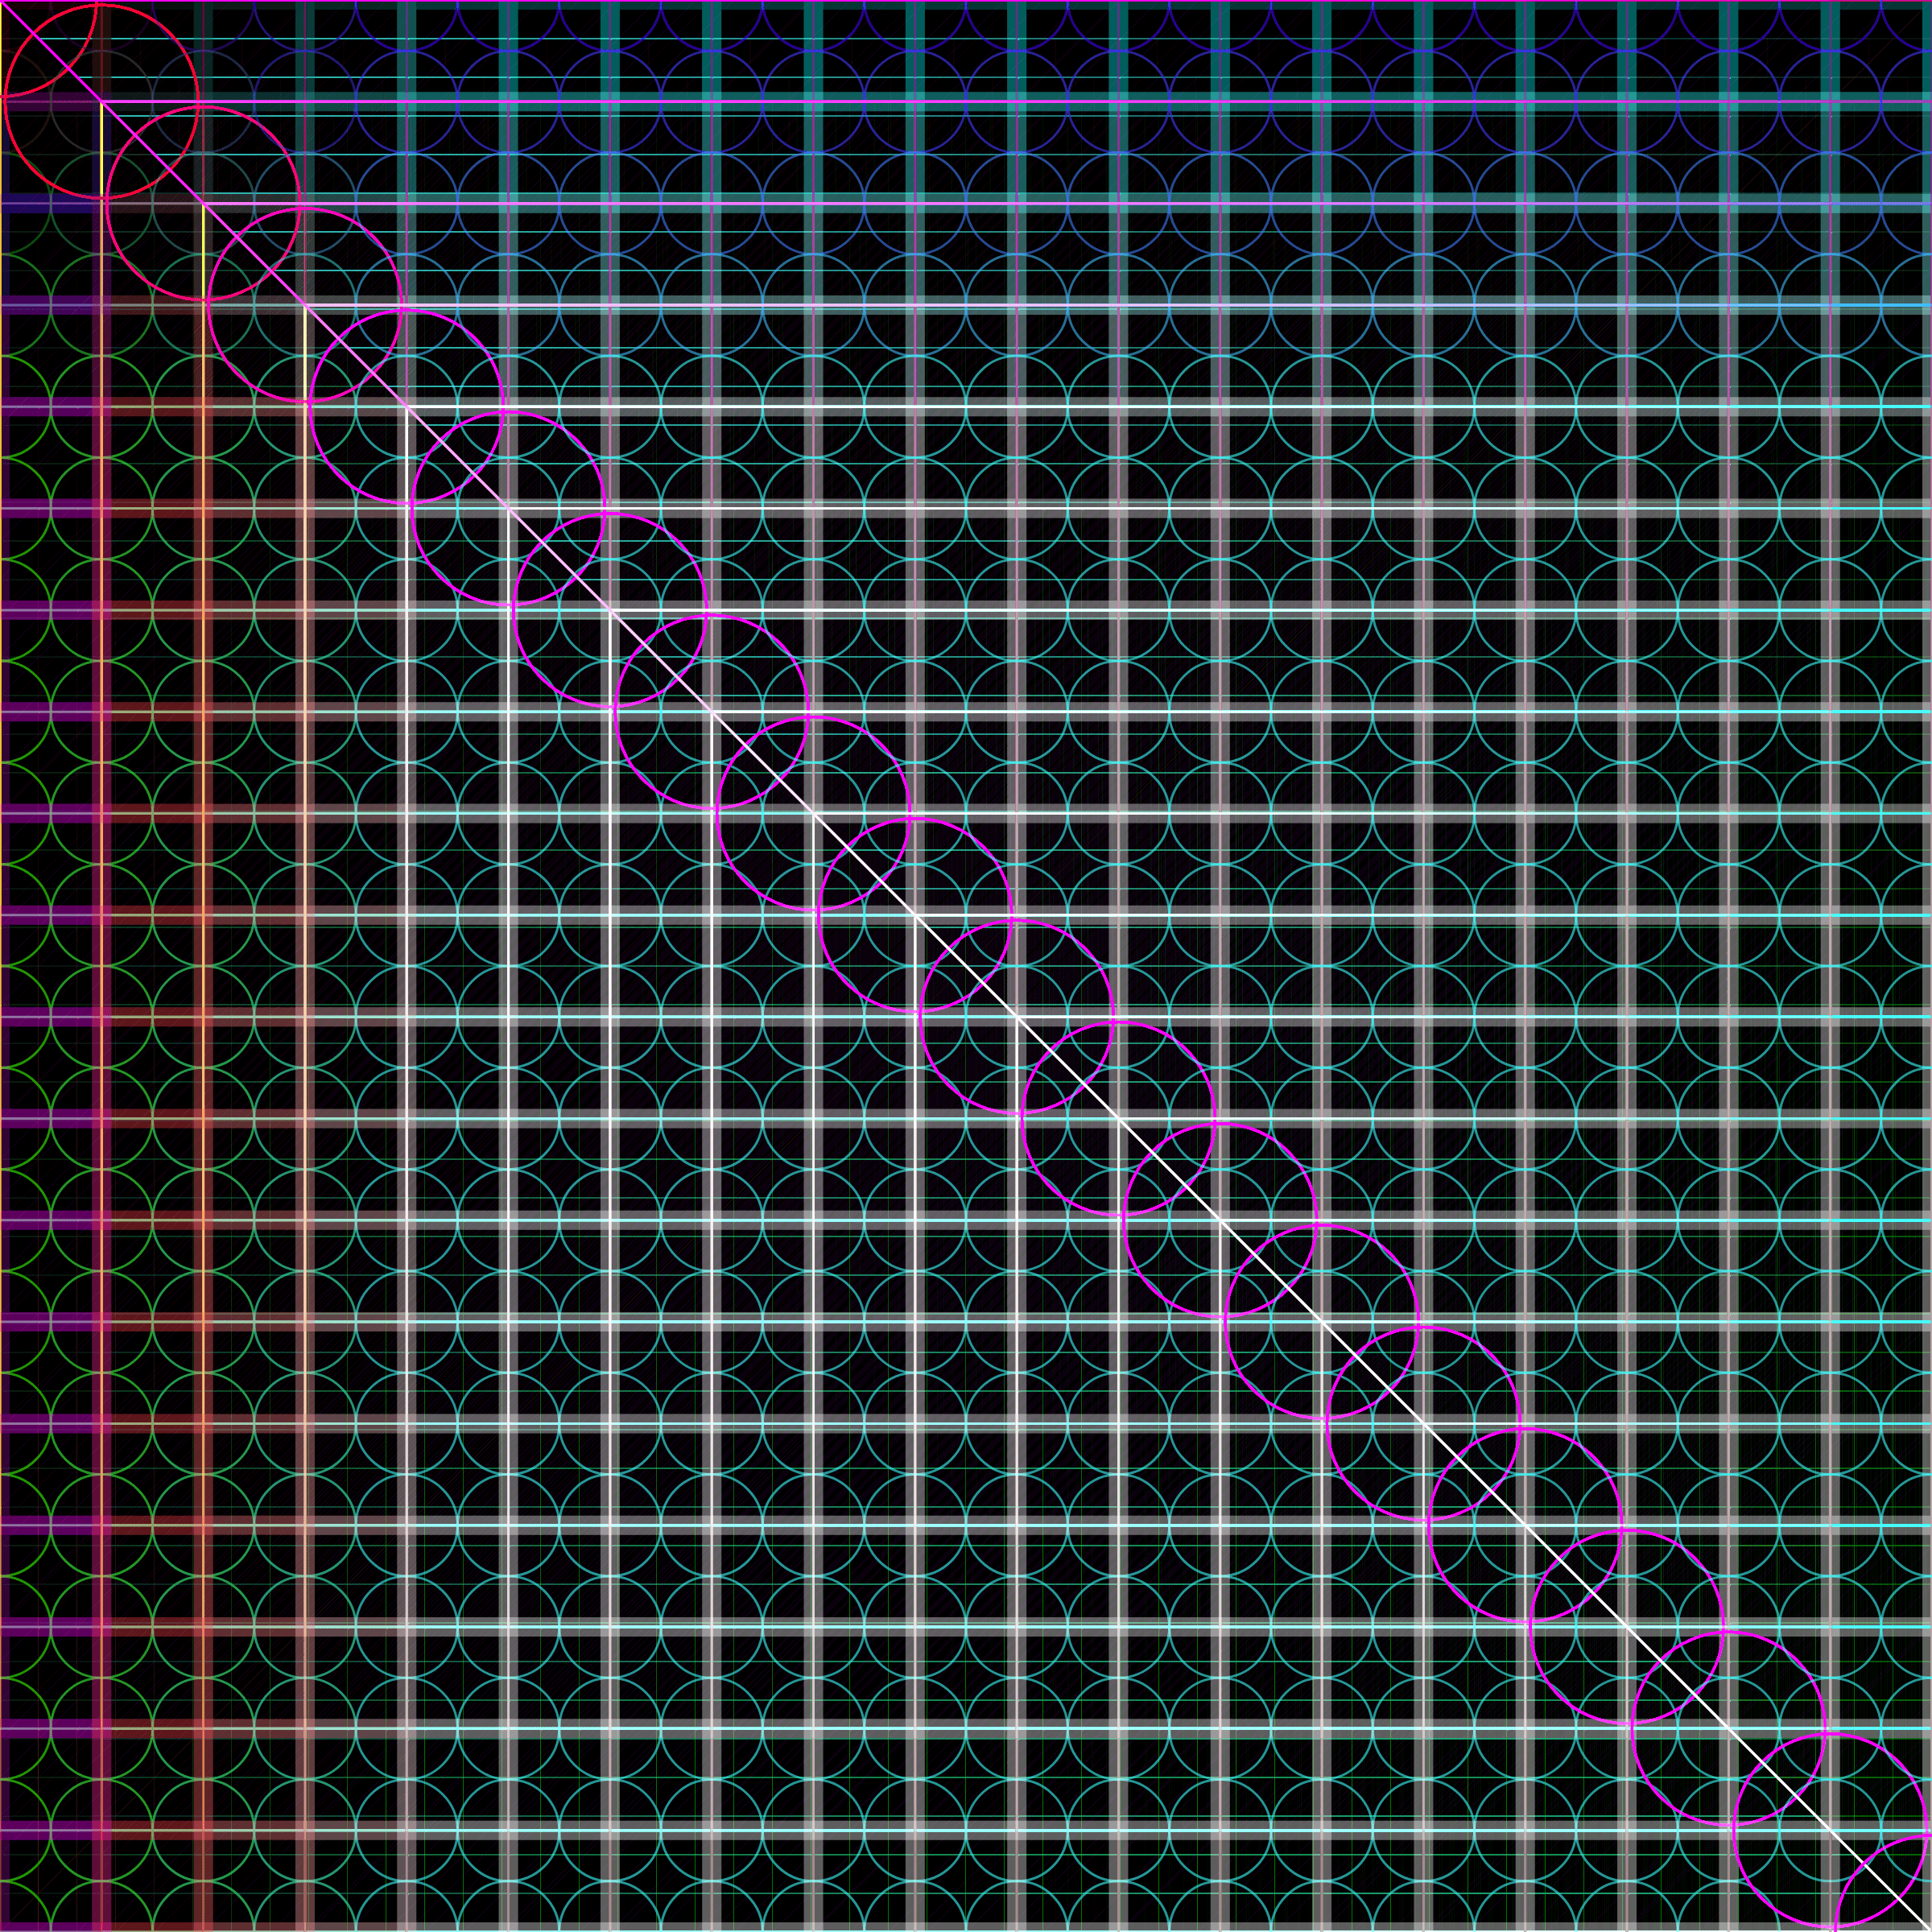 Gravity Grid #13